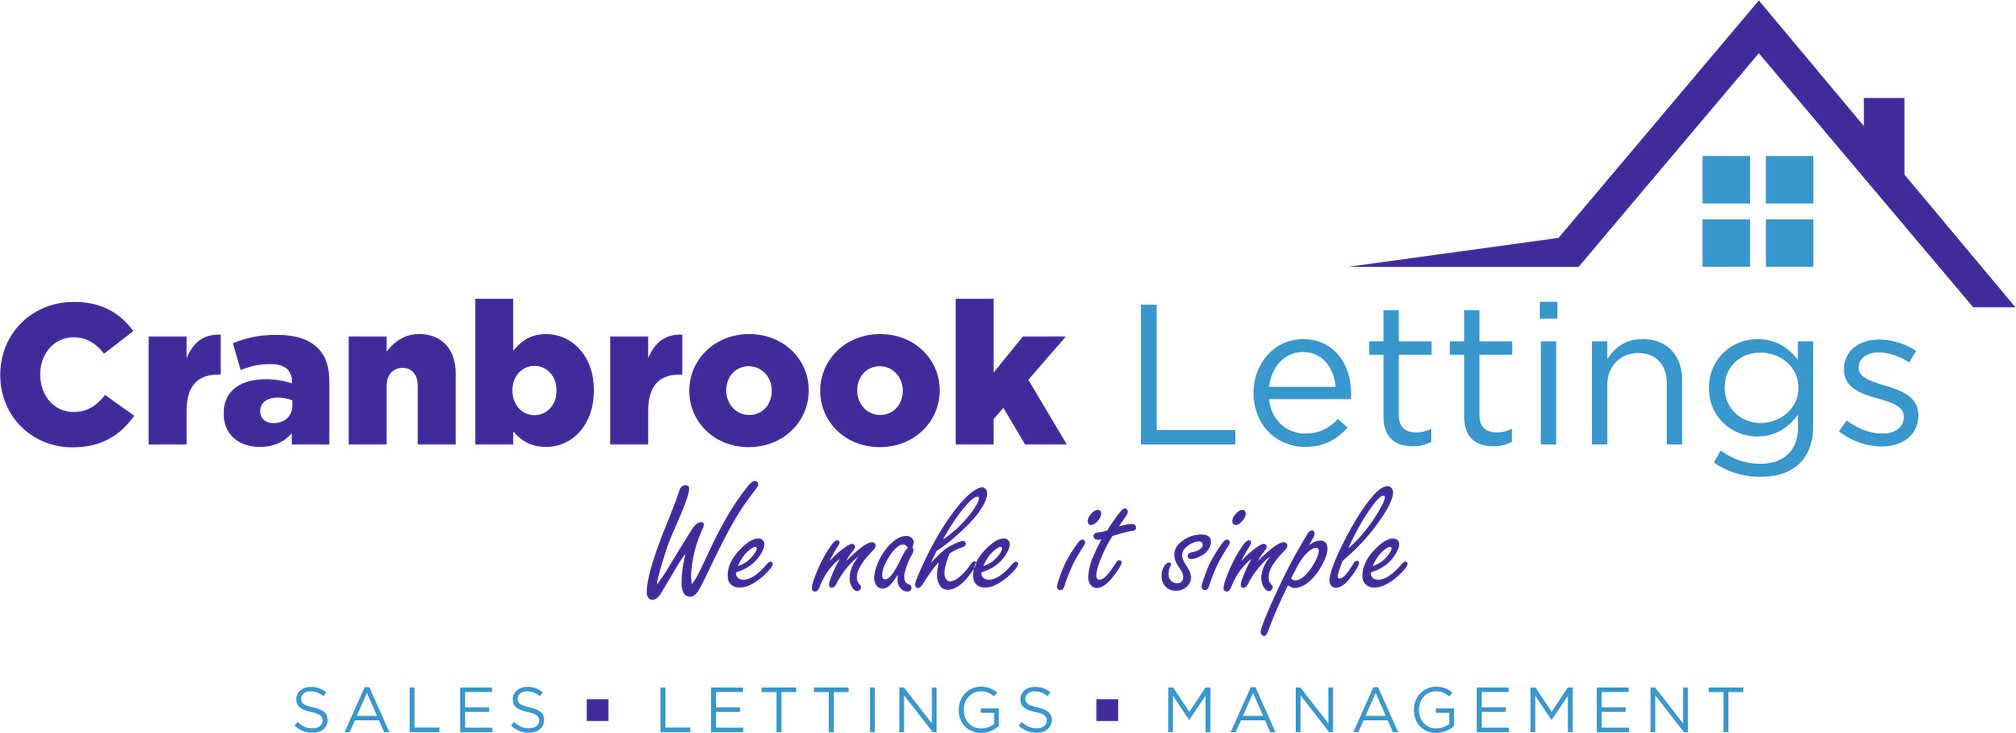 Cranbrook Lettings Ltd Ilford 020 8550 2600